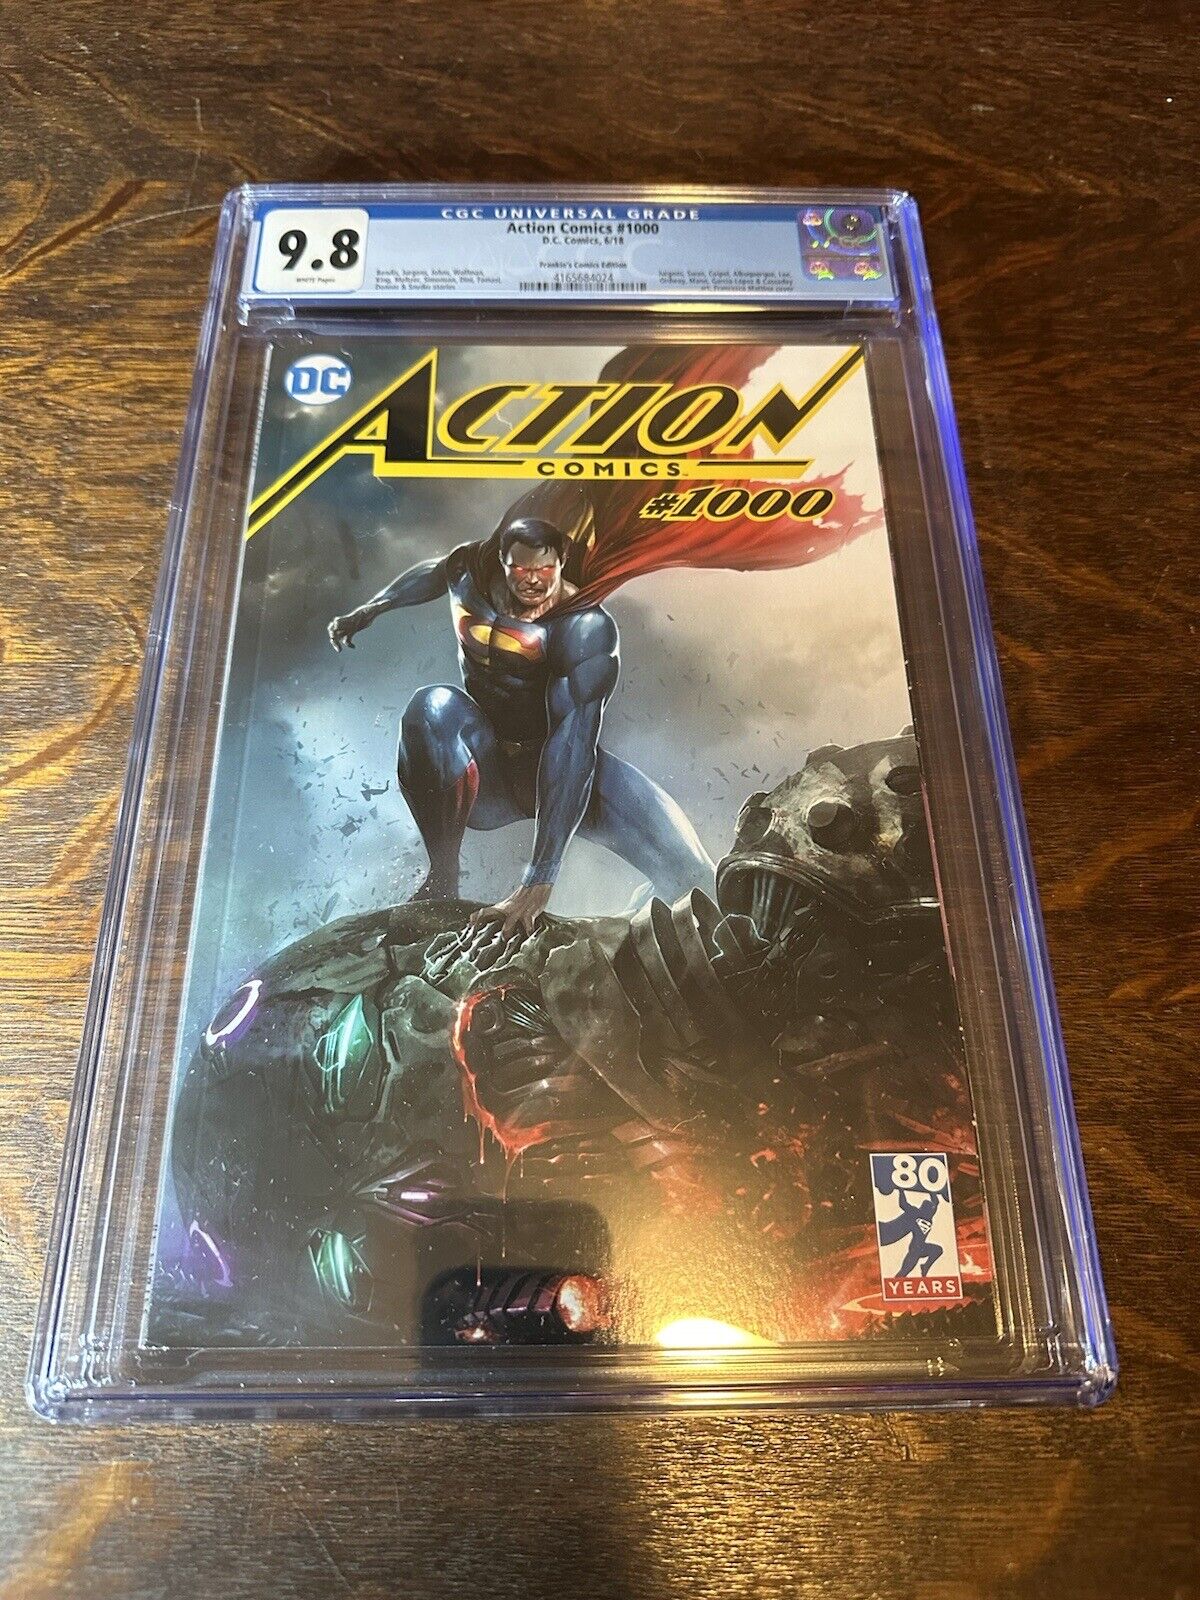 DC Action Comics 1000 CGC 9.8 WP Frankie’s Comics Exclusive Edition Variant